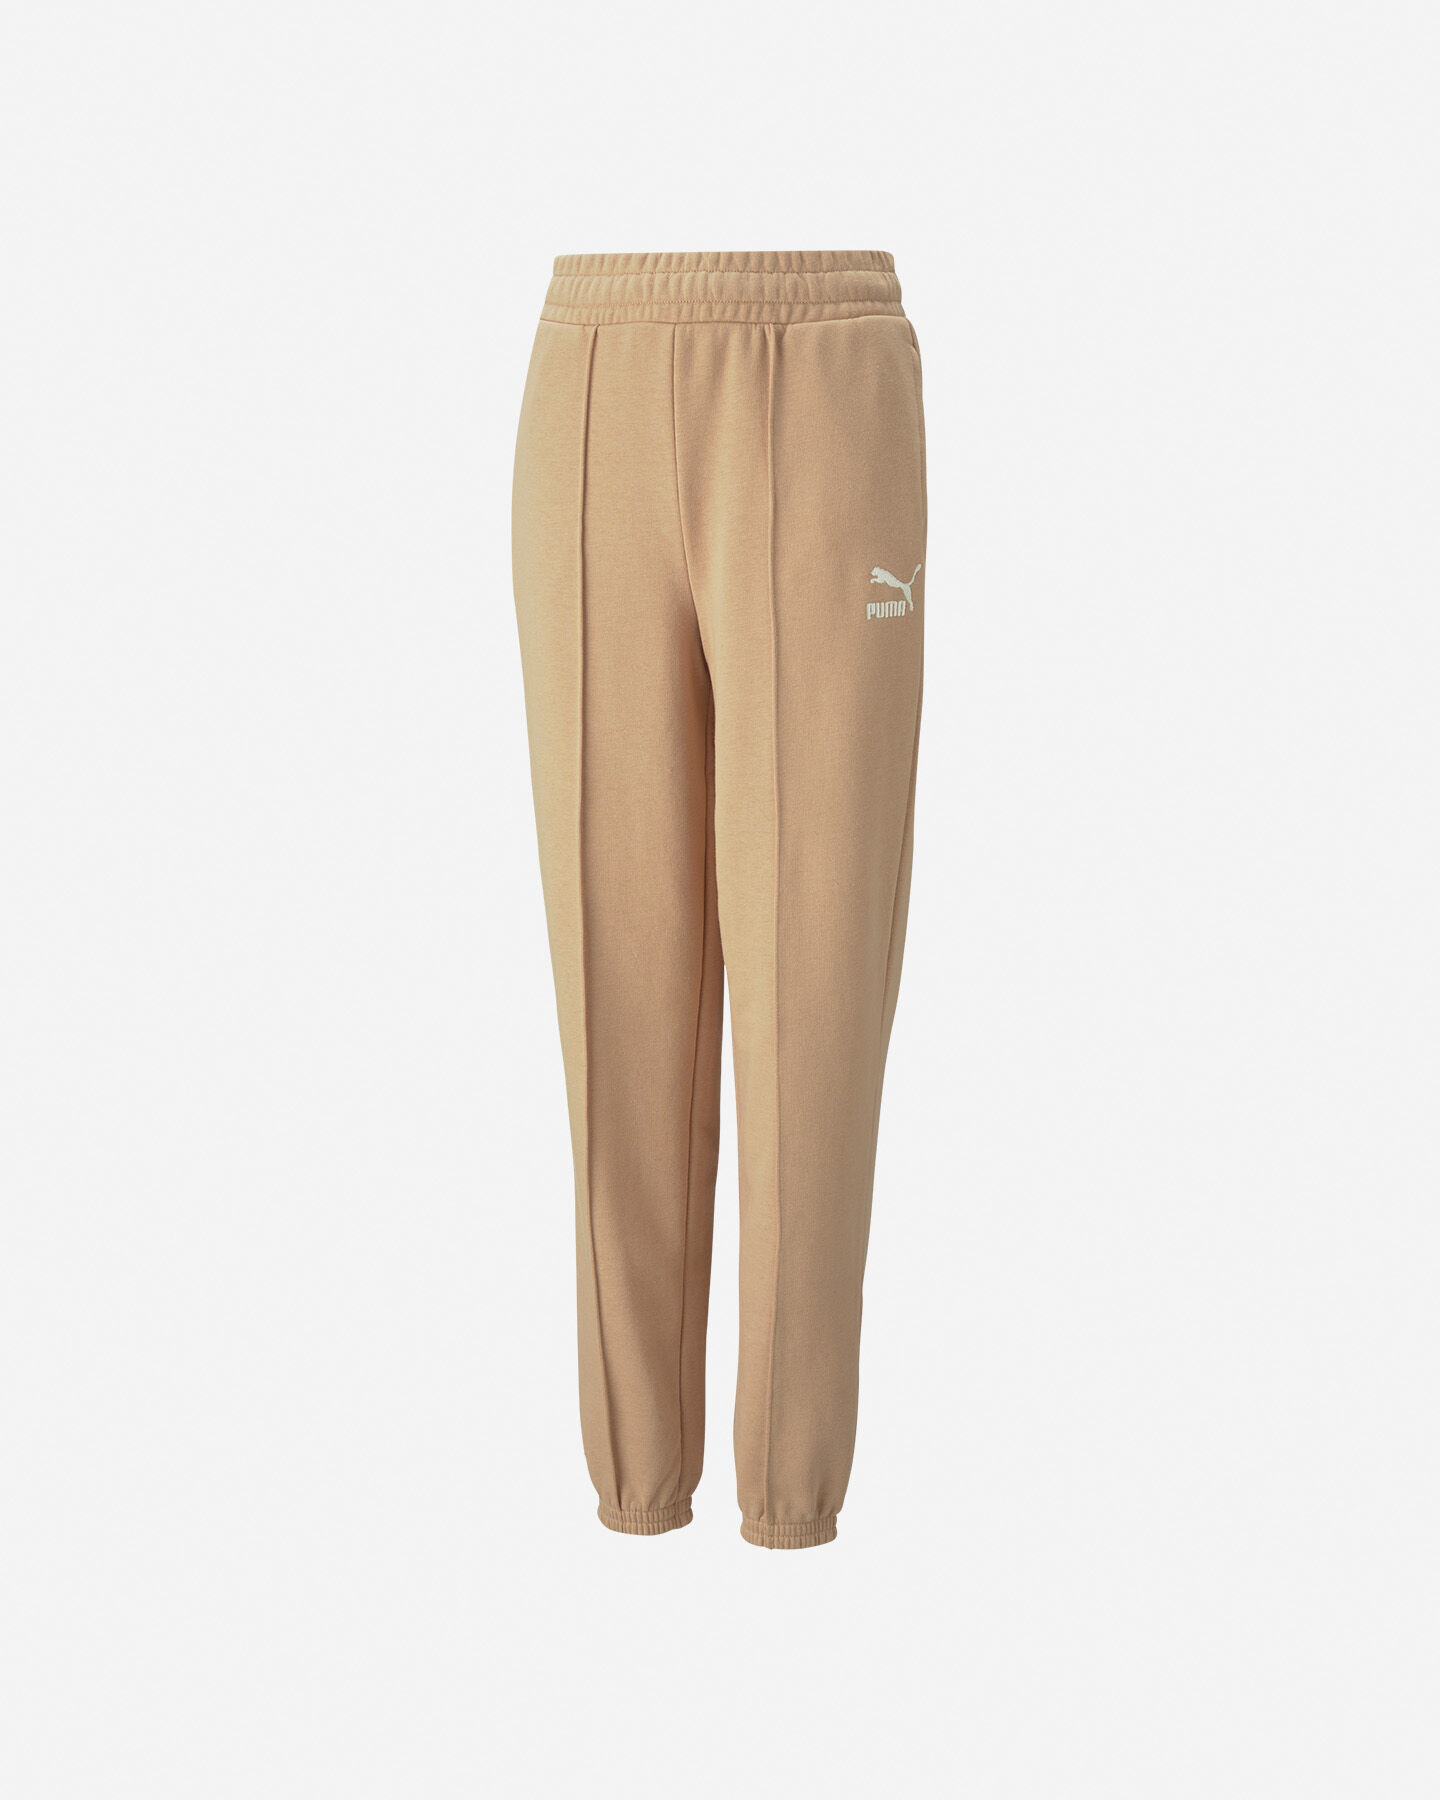  Pantalone PUMA BAGGY JR S5535113|89|164 scatto 0